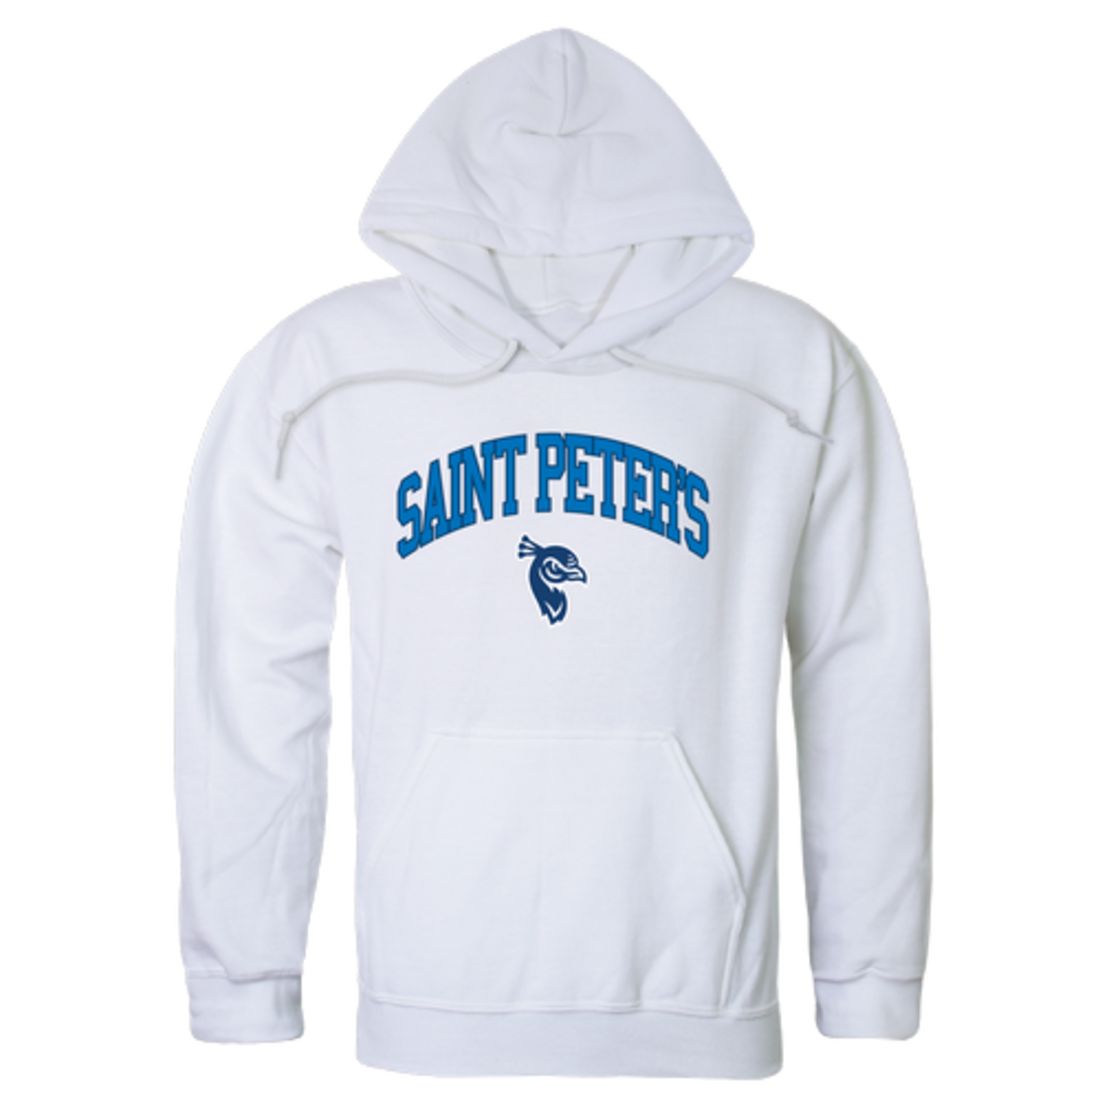 Saint-Peter's-University-Peacocks-Campus-Fleece-Hoodie-Sweatshirts